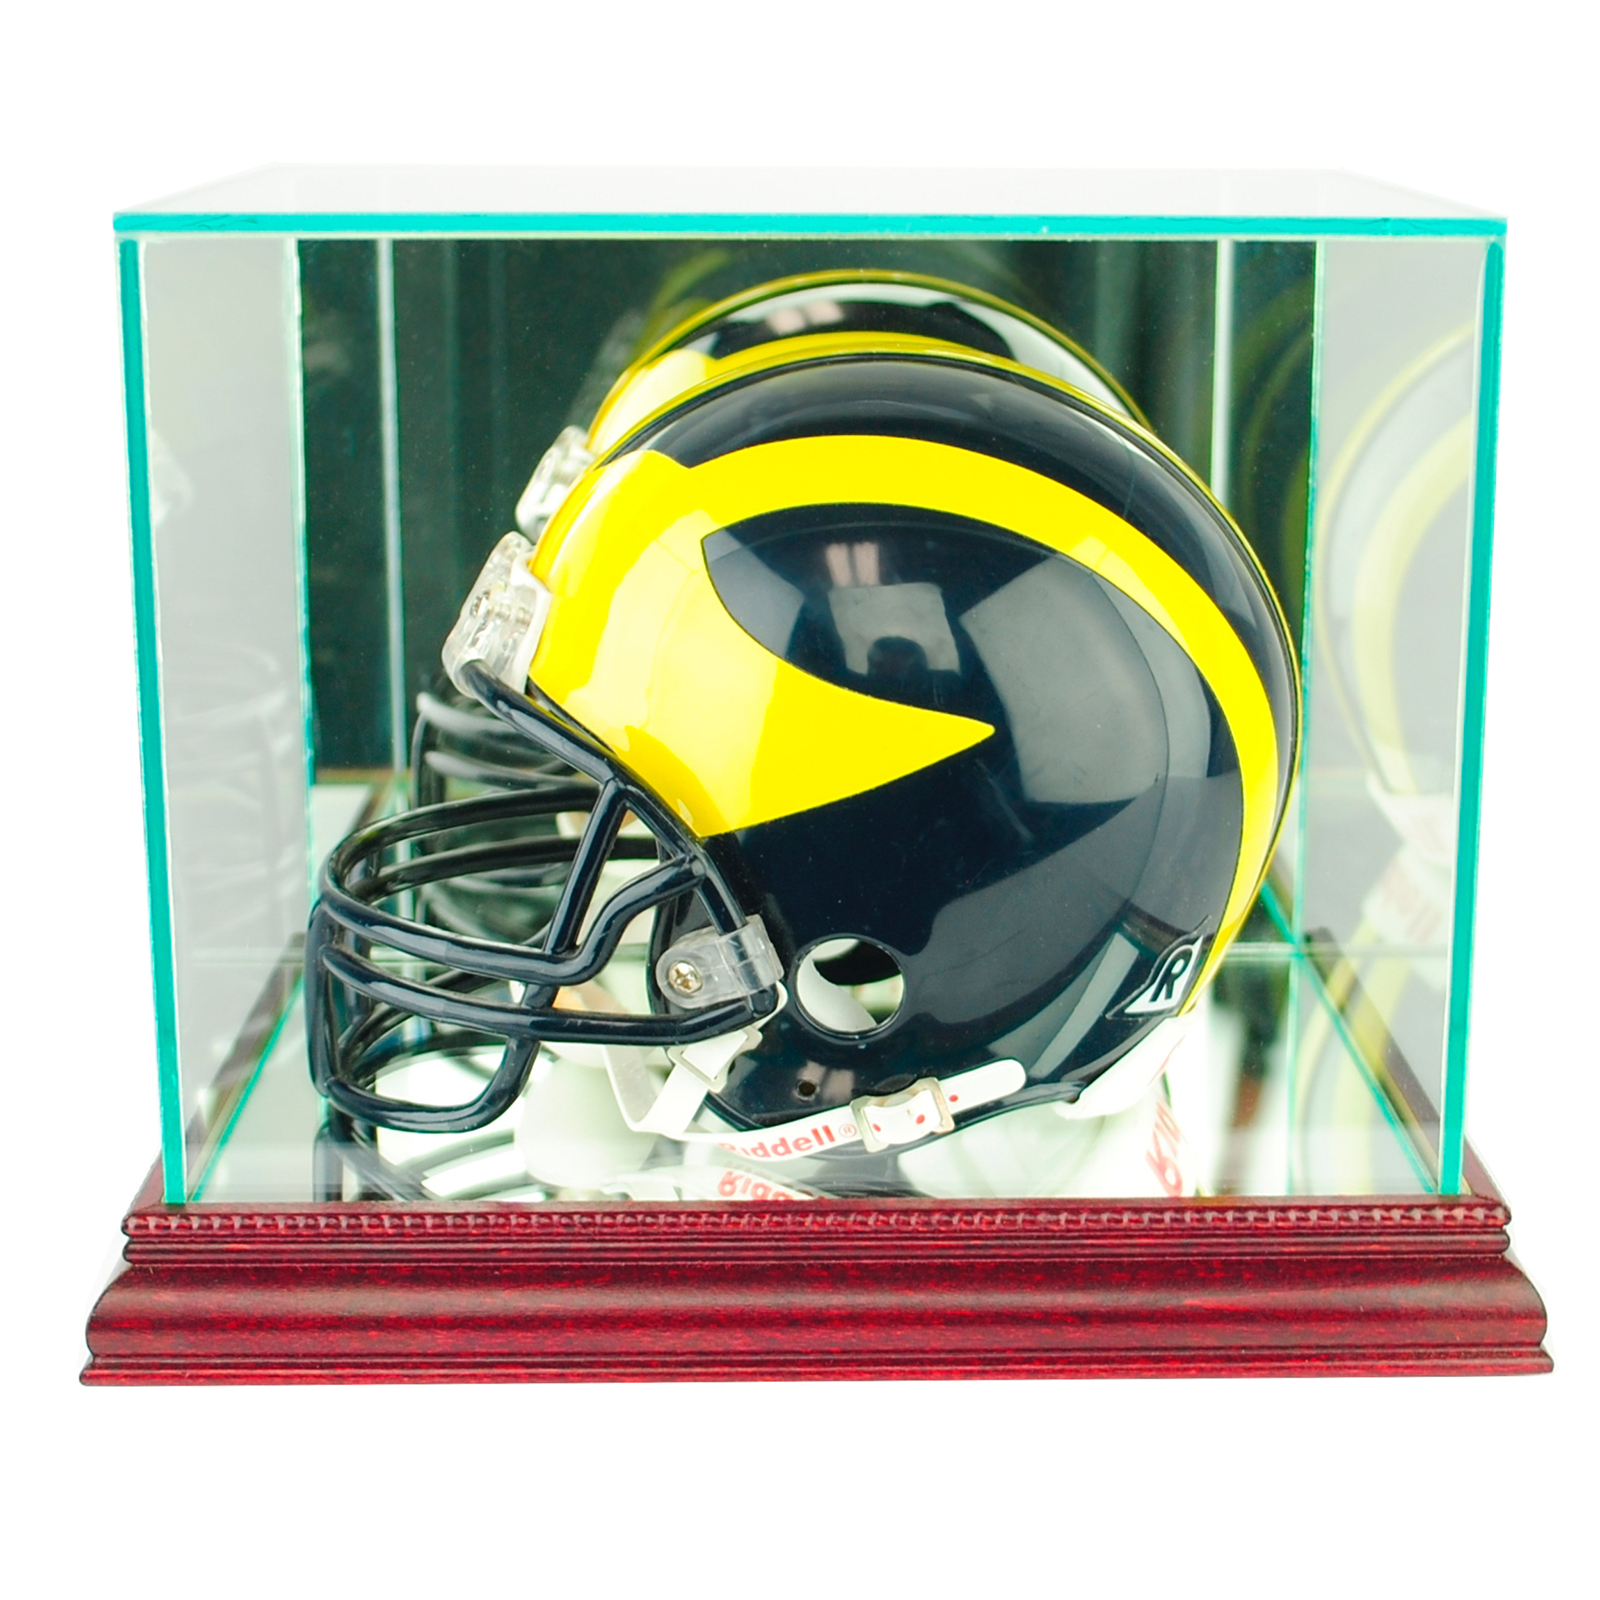 Perfect Cases Mini Football Helmet Display Case